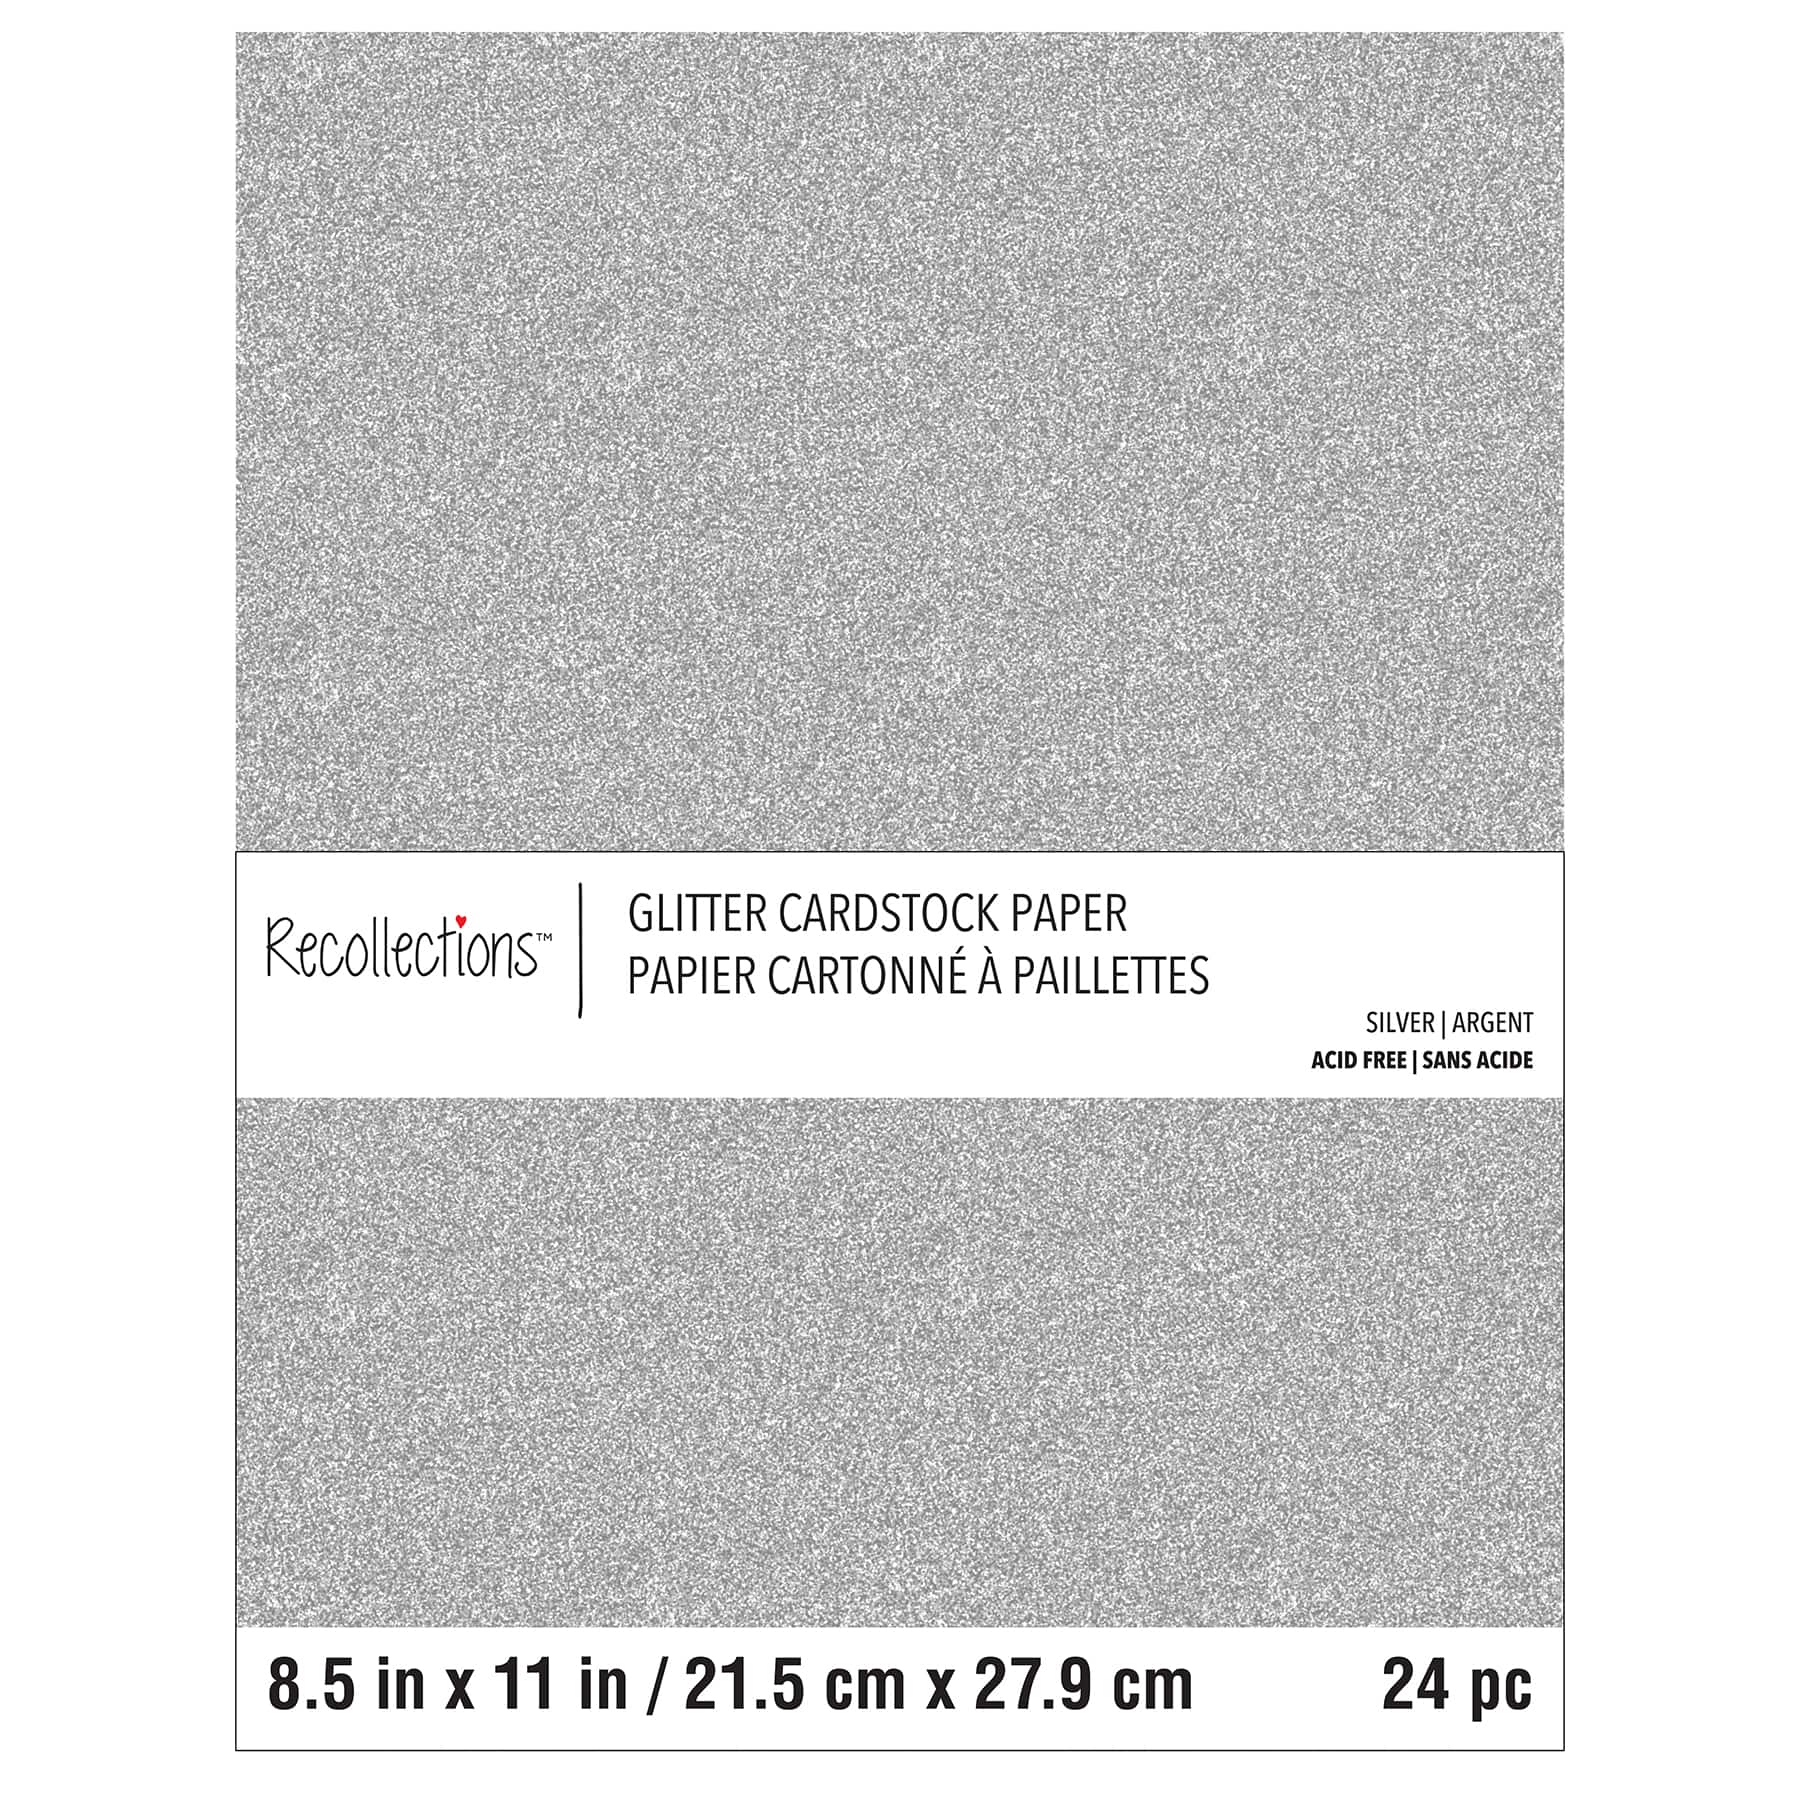 Silver Glitter Cardstock 8.5 x 11 - 10 Sheets - Spellbinders